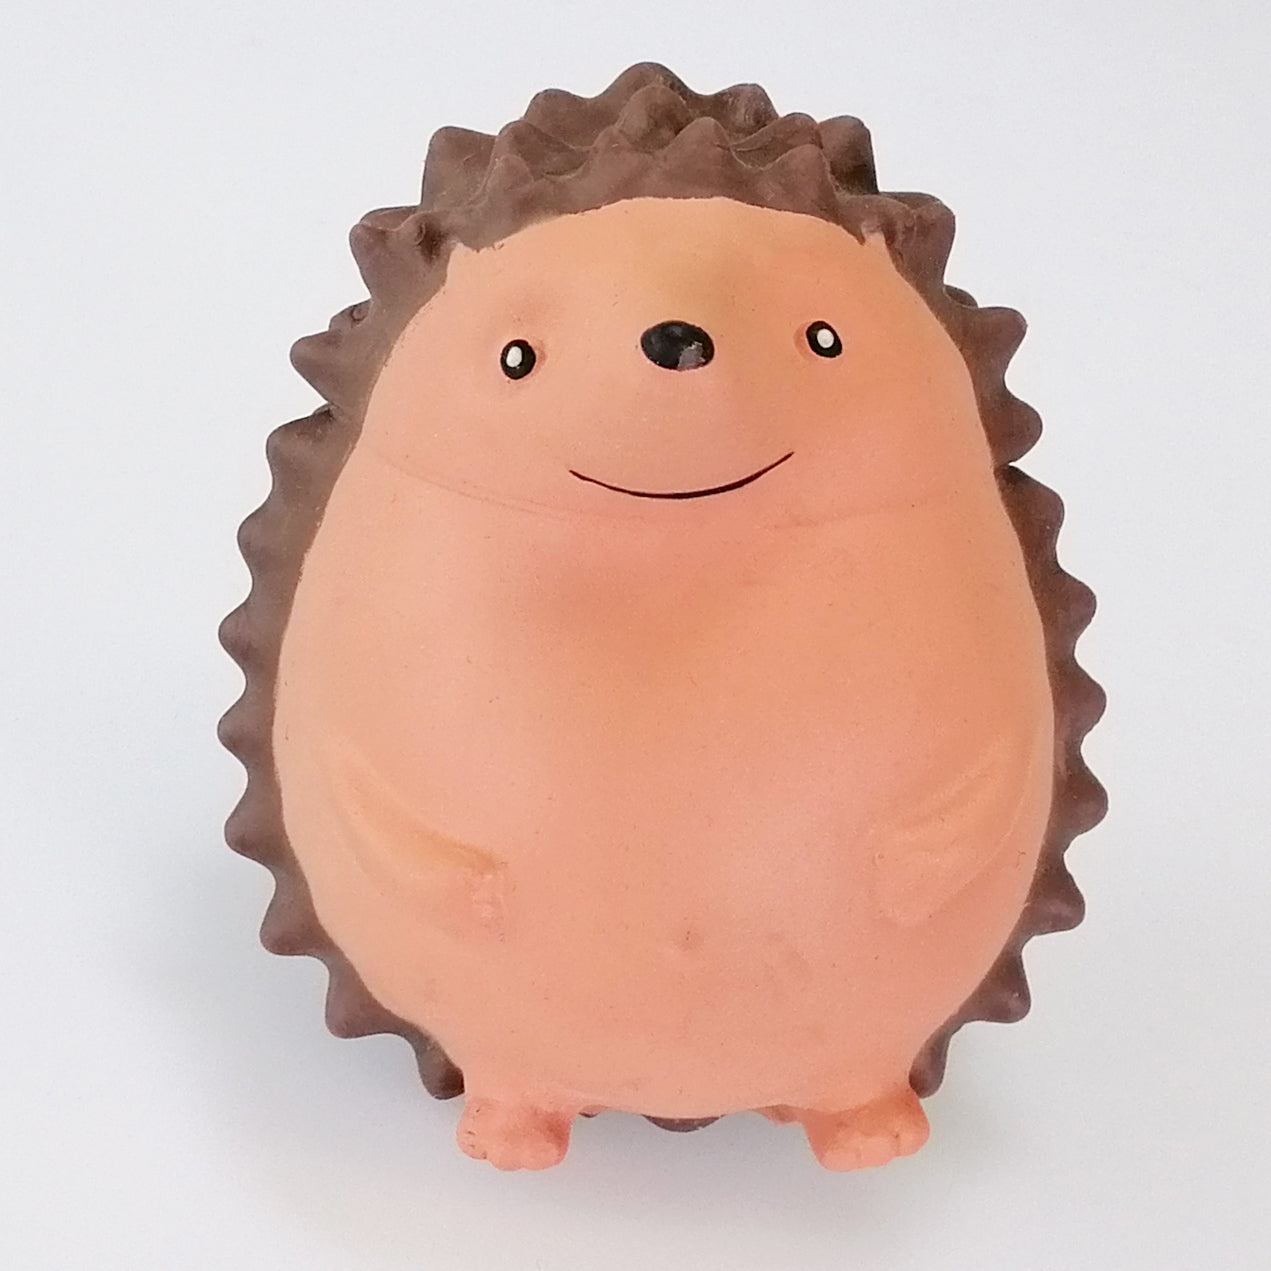 Stress Hog - Stress Toy